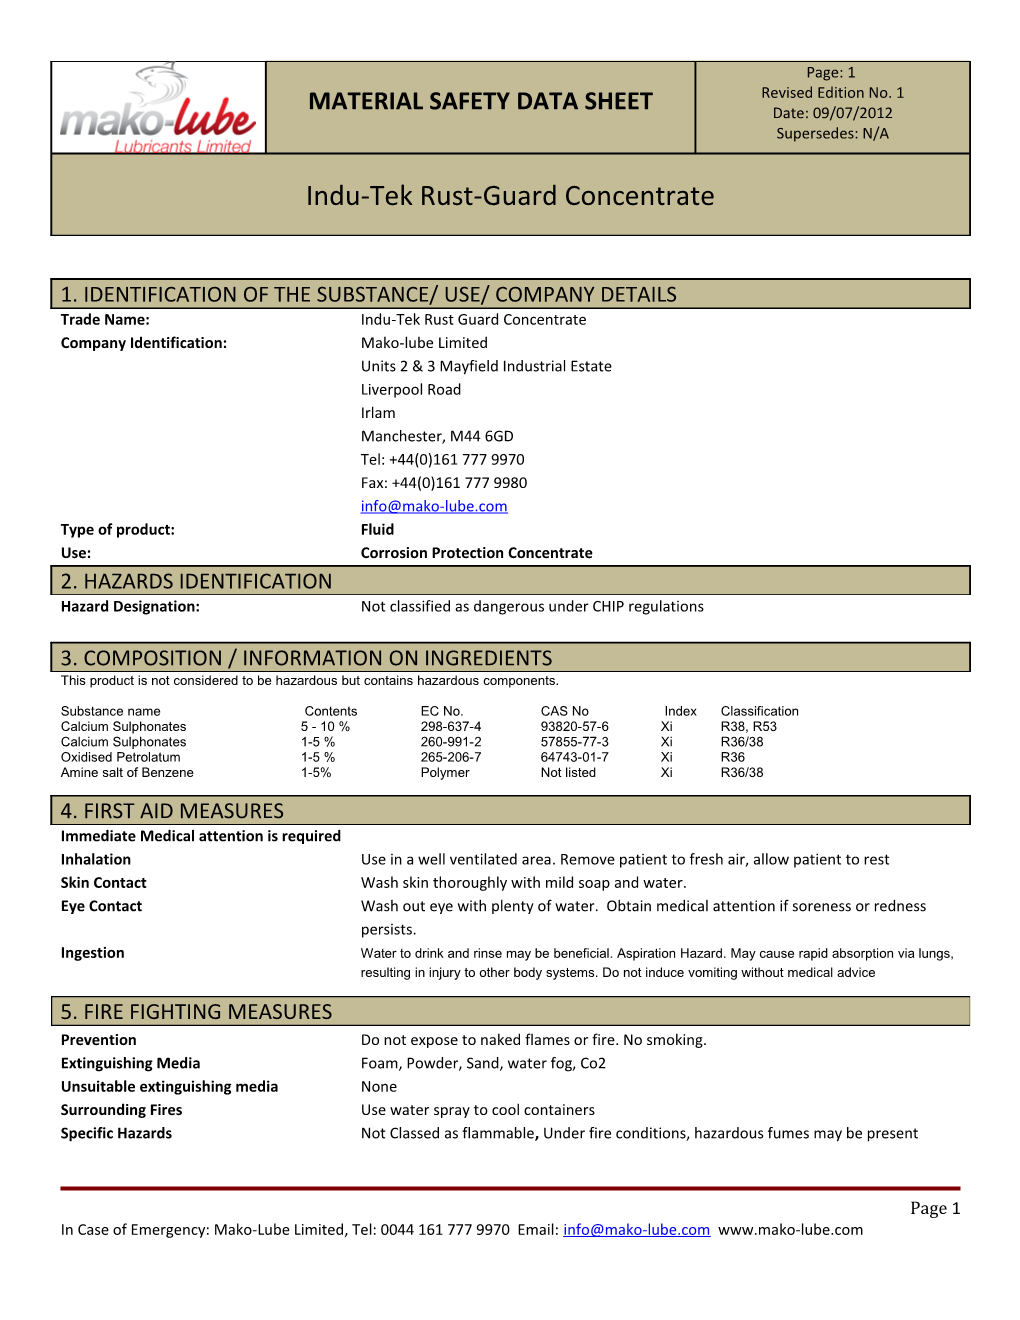 Trade Name:Indu-Tek Rust Guard Concentrate